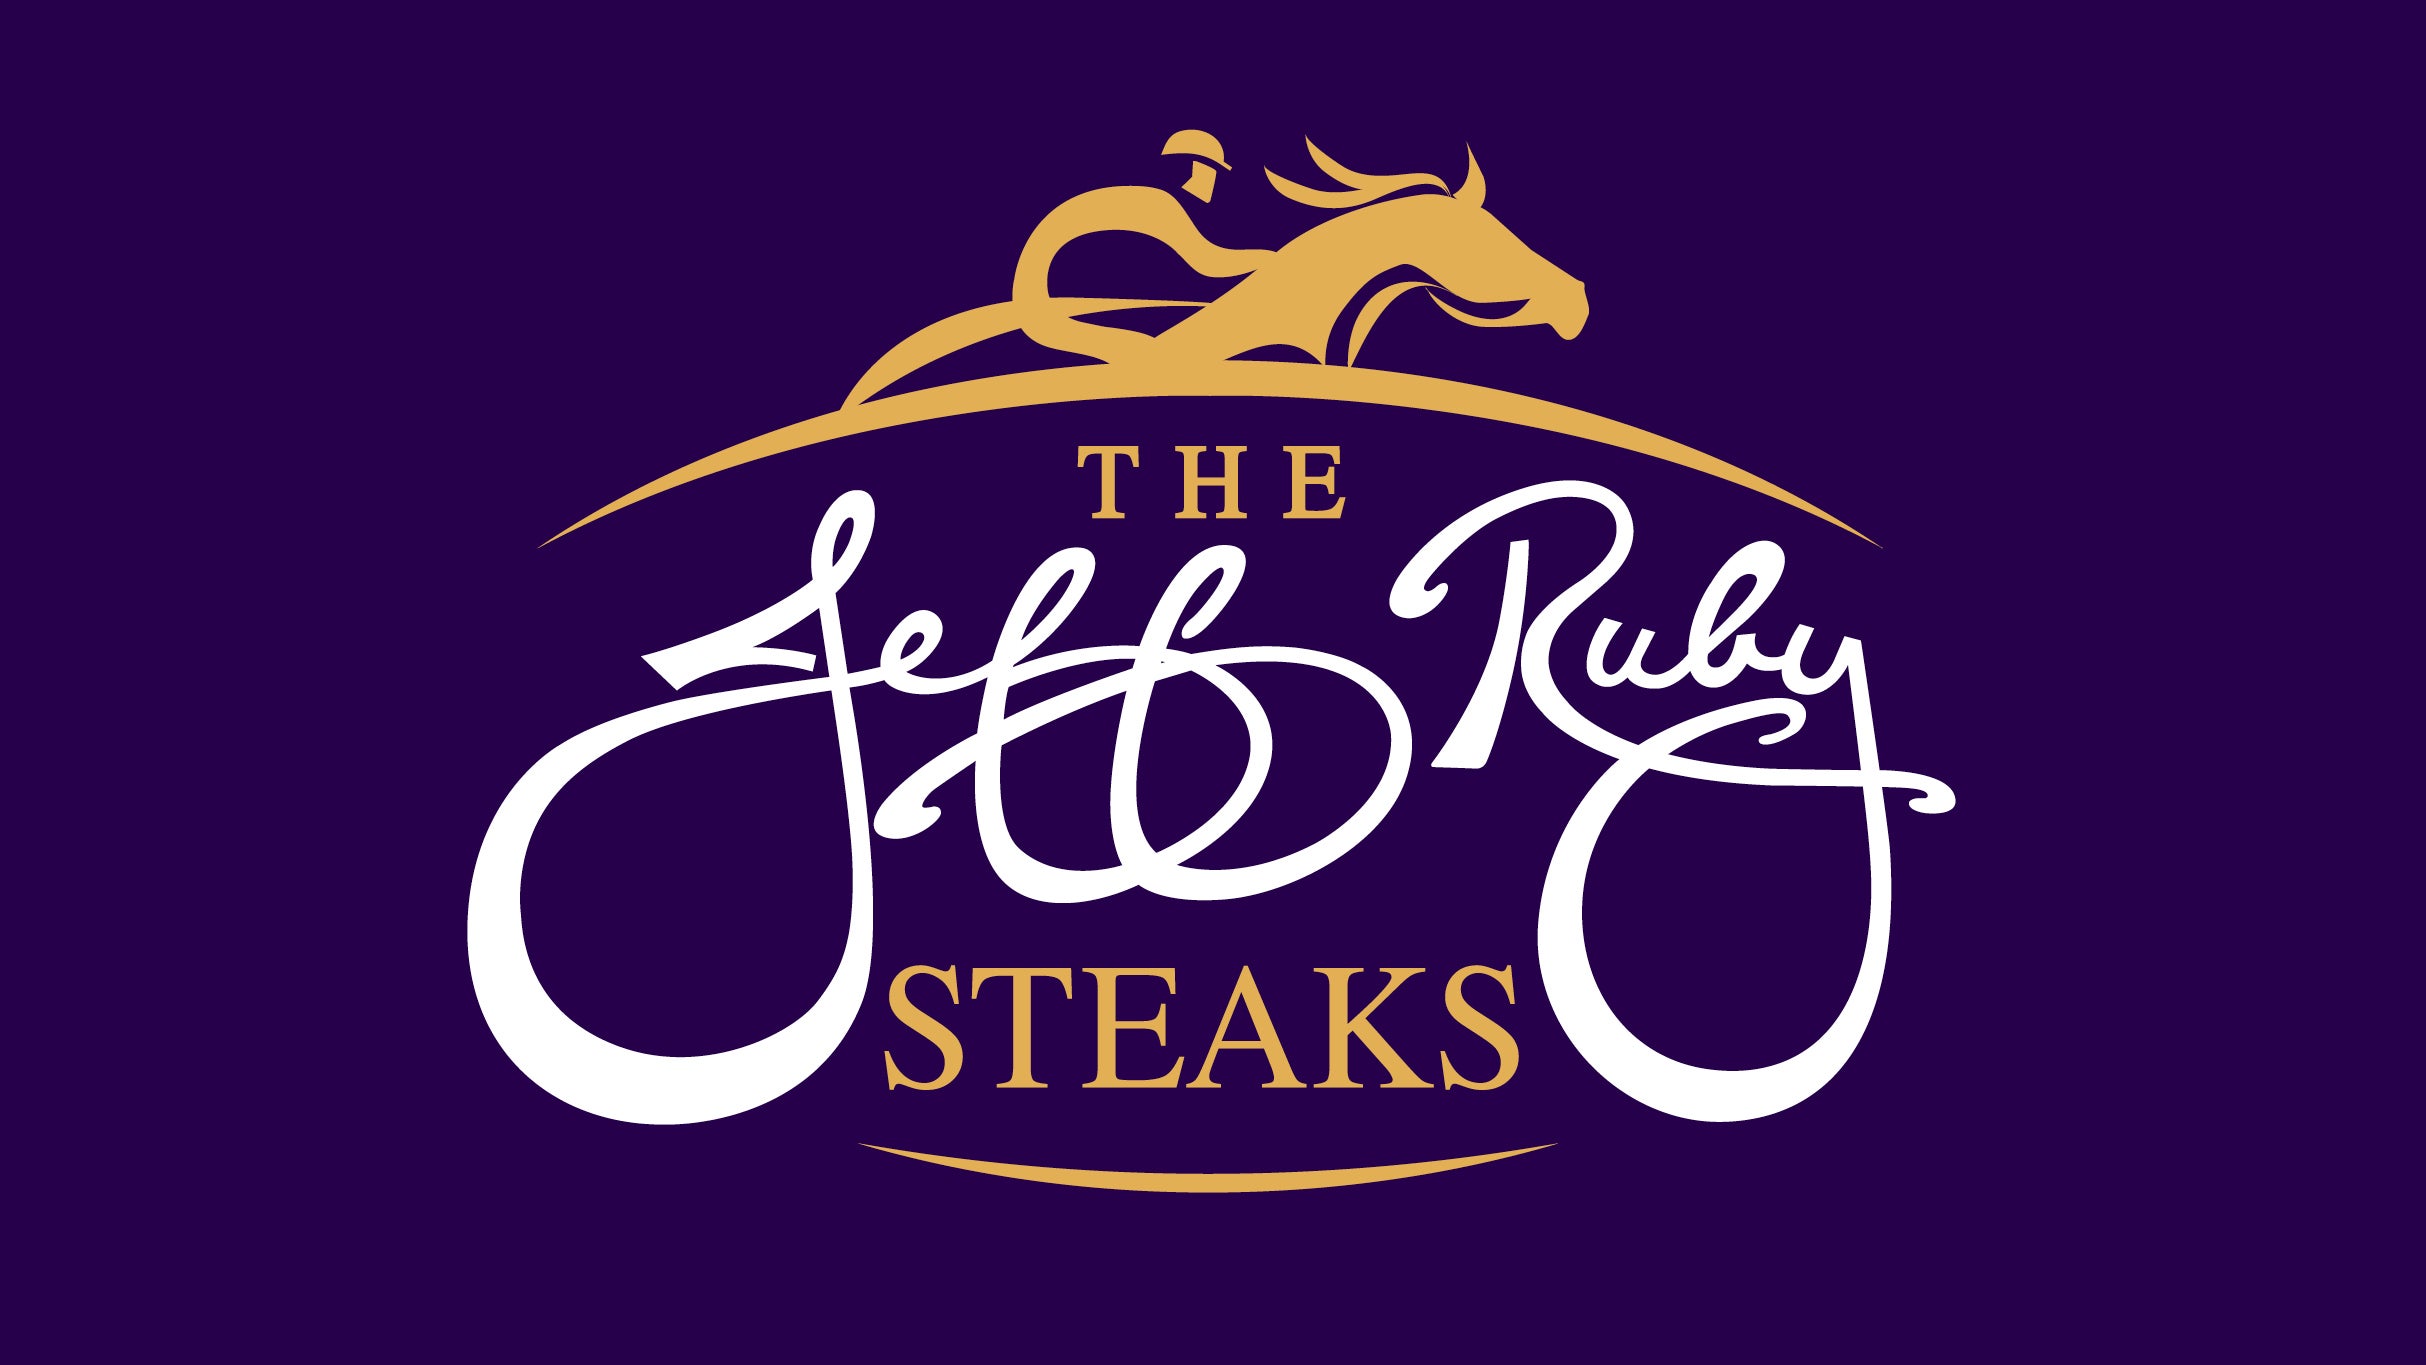 Jeff Ruby Steaks presale information on freepresalepasswords.com